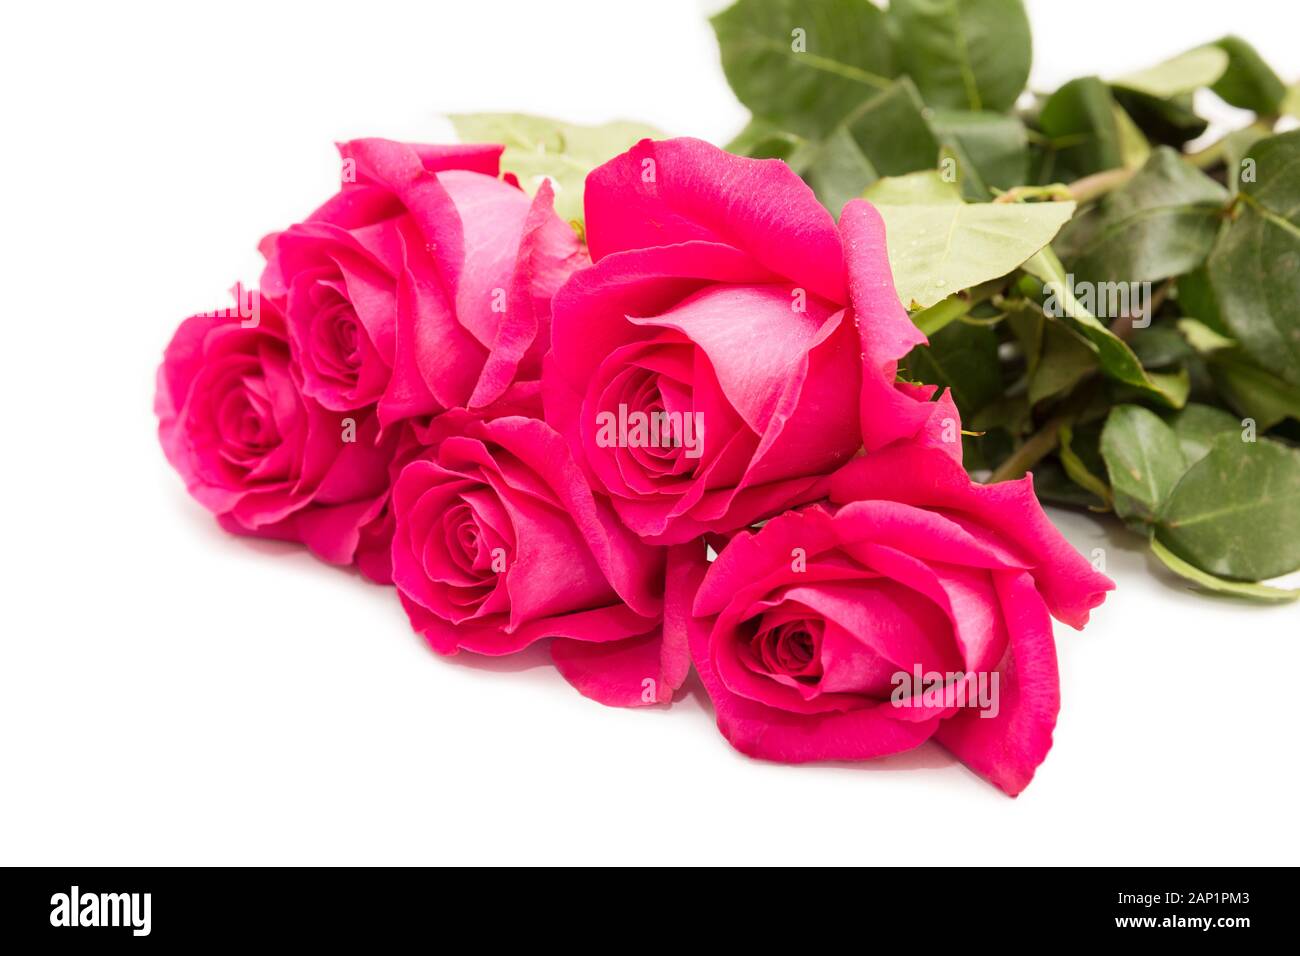 Ramo de 5 rosas rosas aislado sobre un fondo blanco. Foto de stock